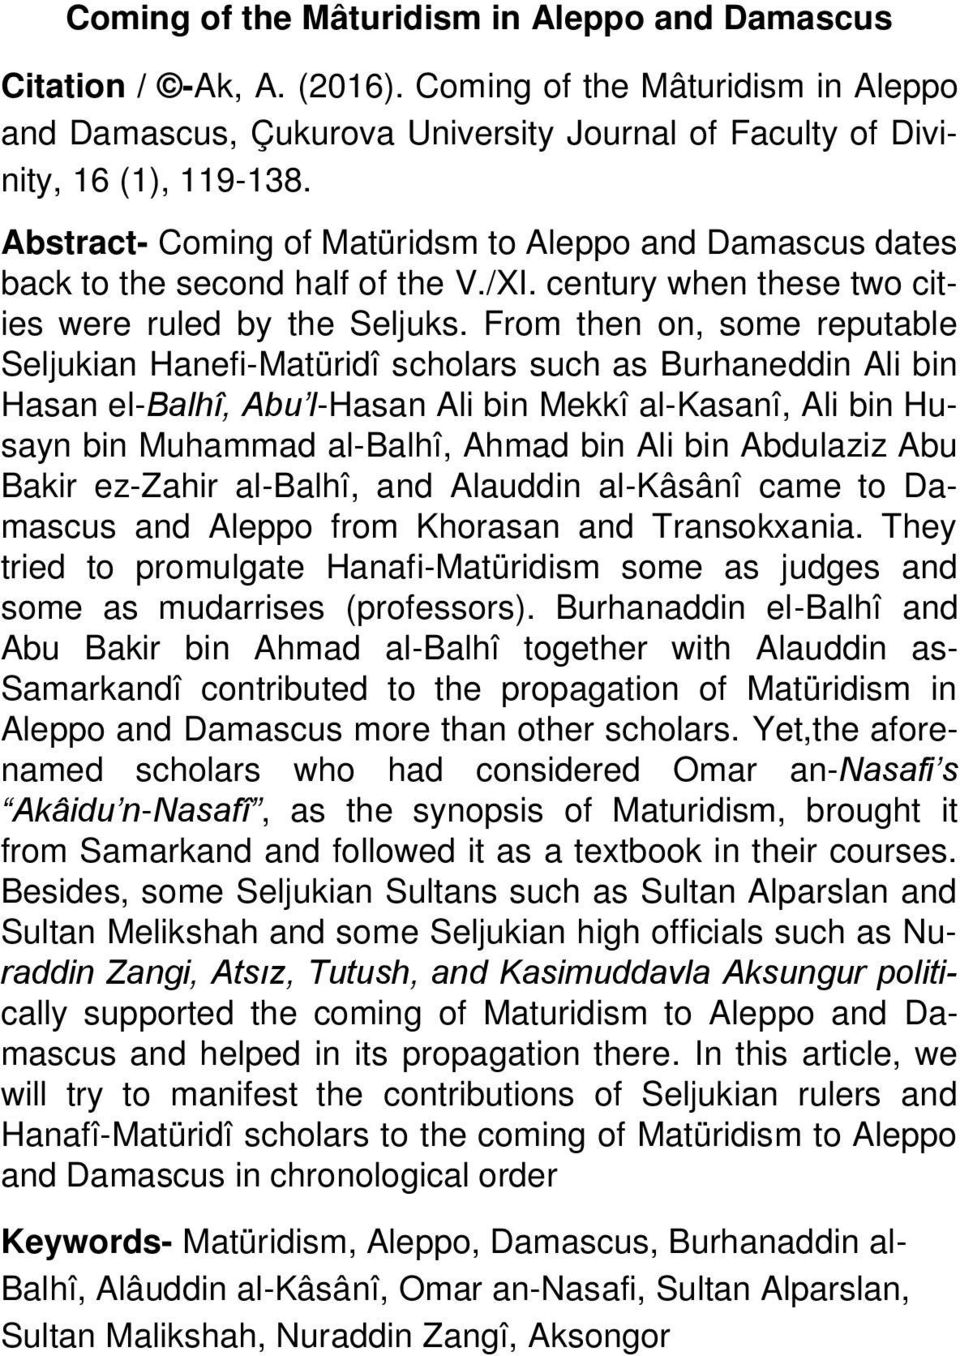 From then on, some reputable Seljukian Hanefi-Matüridî scholars such as Burhaneddin Ali bin Hasan el-balhî, Abu l-hasan Ali bin Mekkî al-kasanî, Ali bin Husayn bin Muhammad al-balhî, Ahmad bin Ali